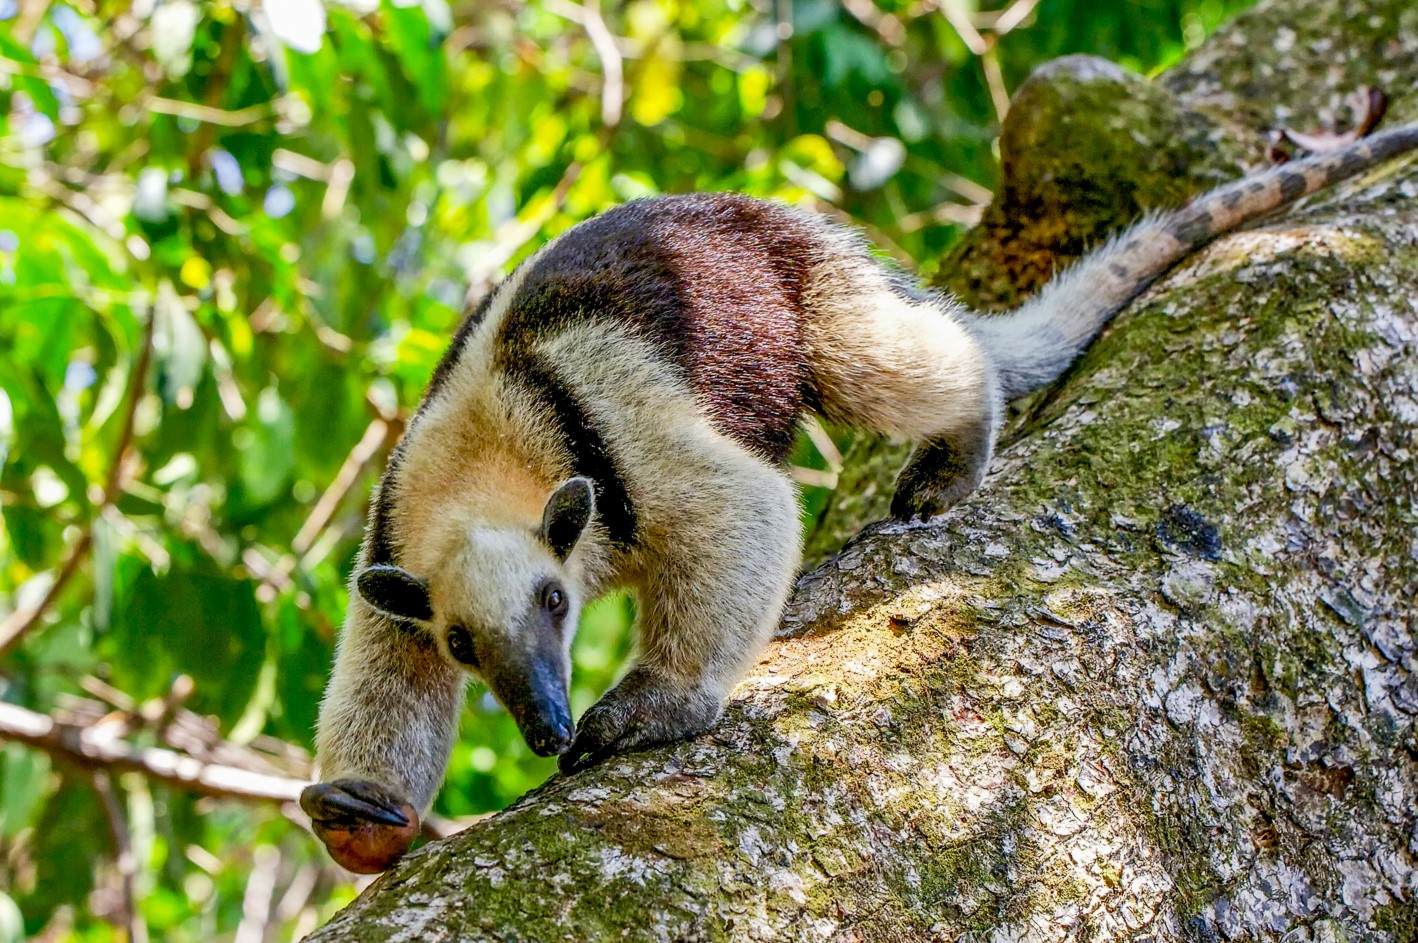 A tamandua anteater in the treetops of Costa Rica